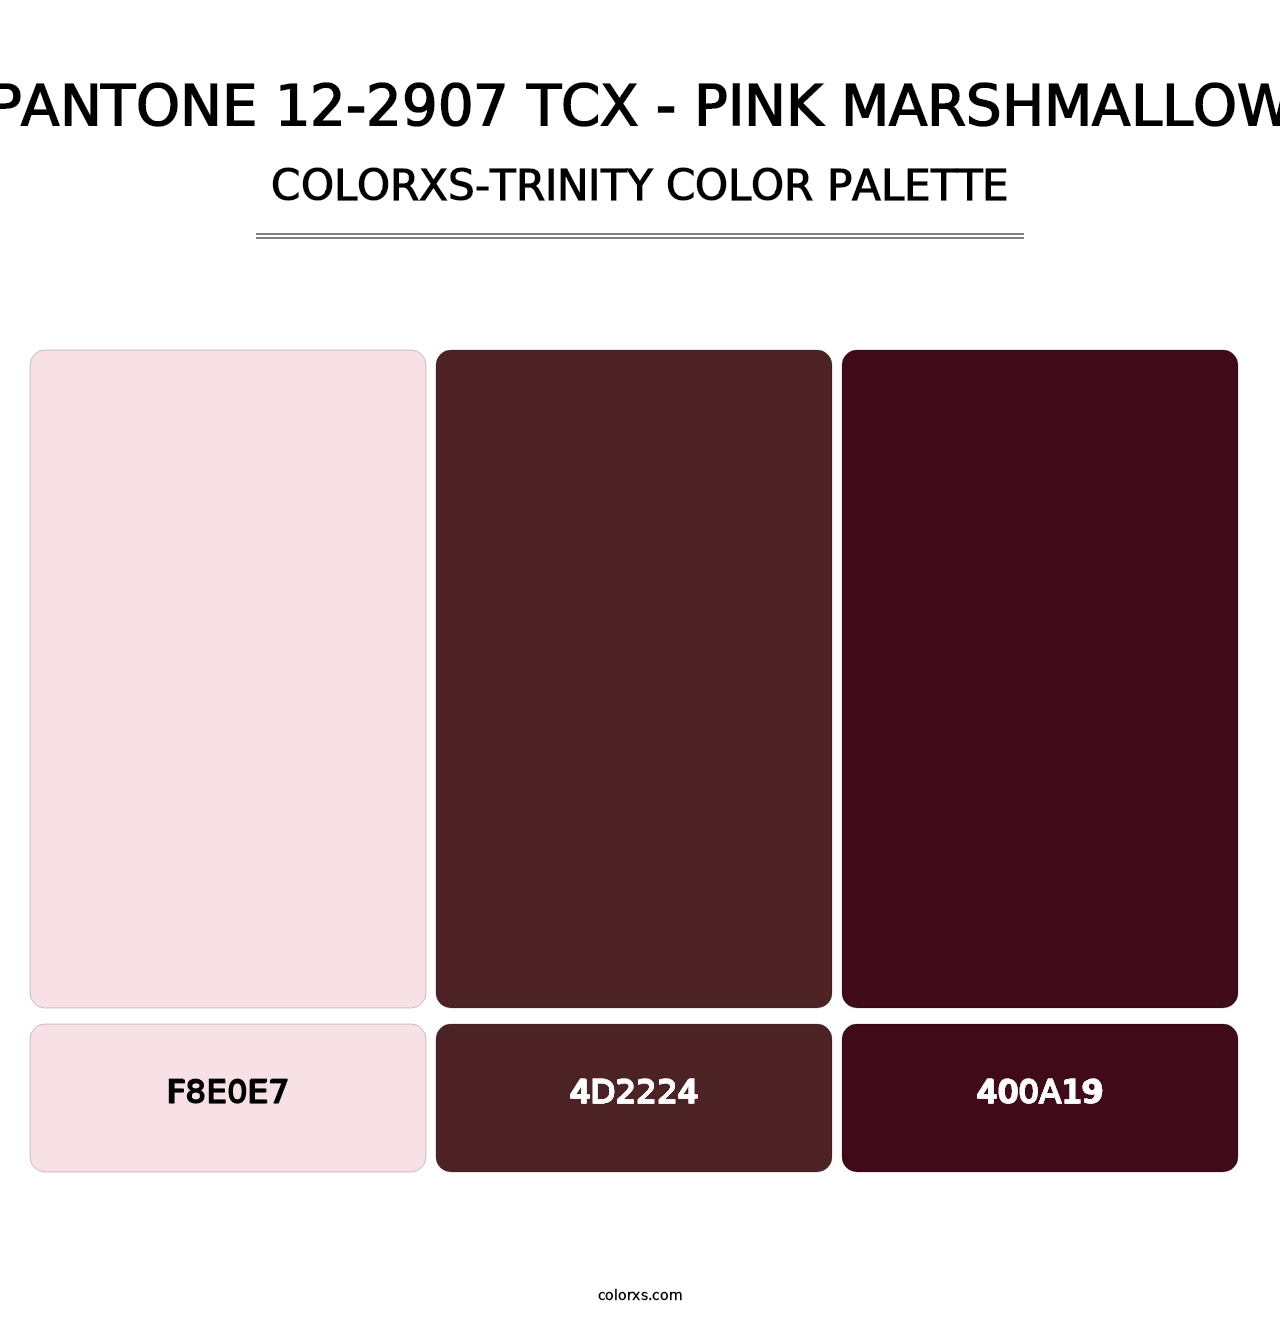 PANTONE 12-2907 TCX - Pink Marshmallow - Colorxs Trinity Palette